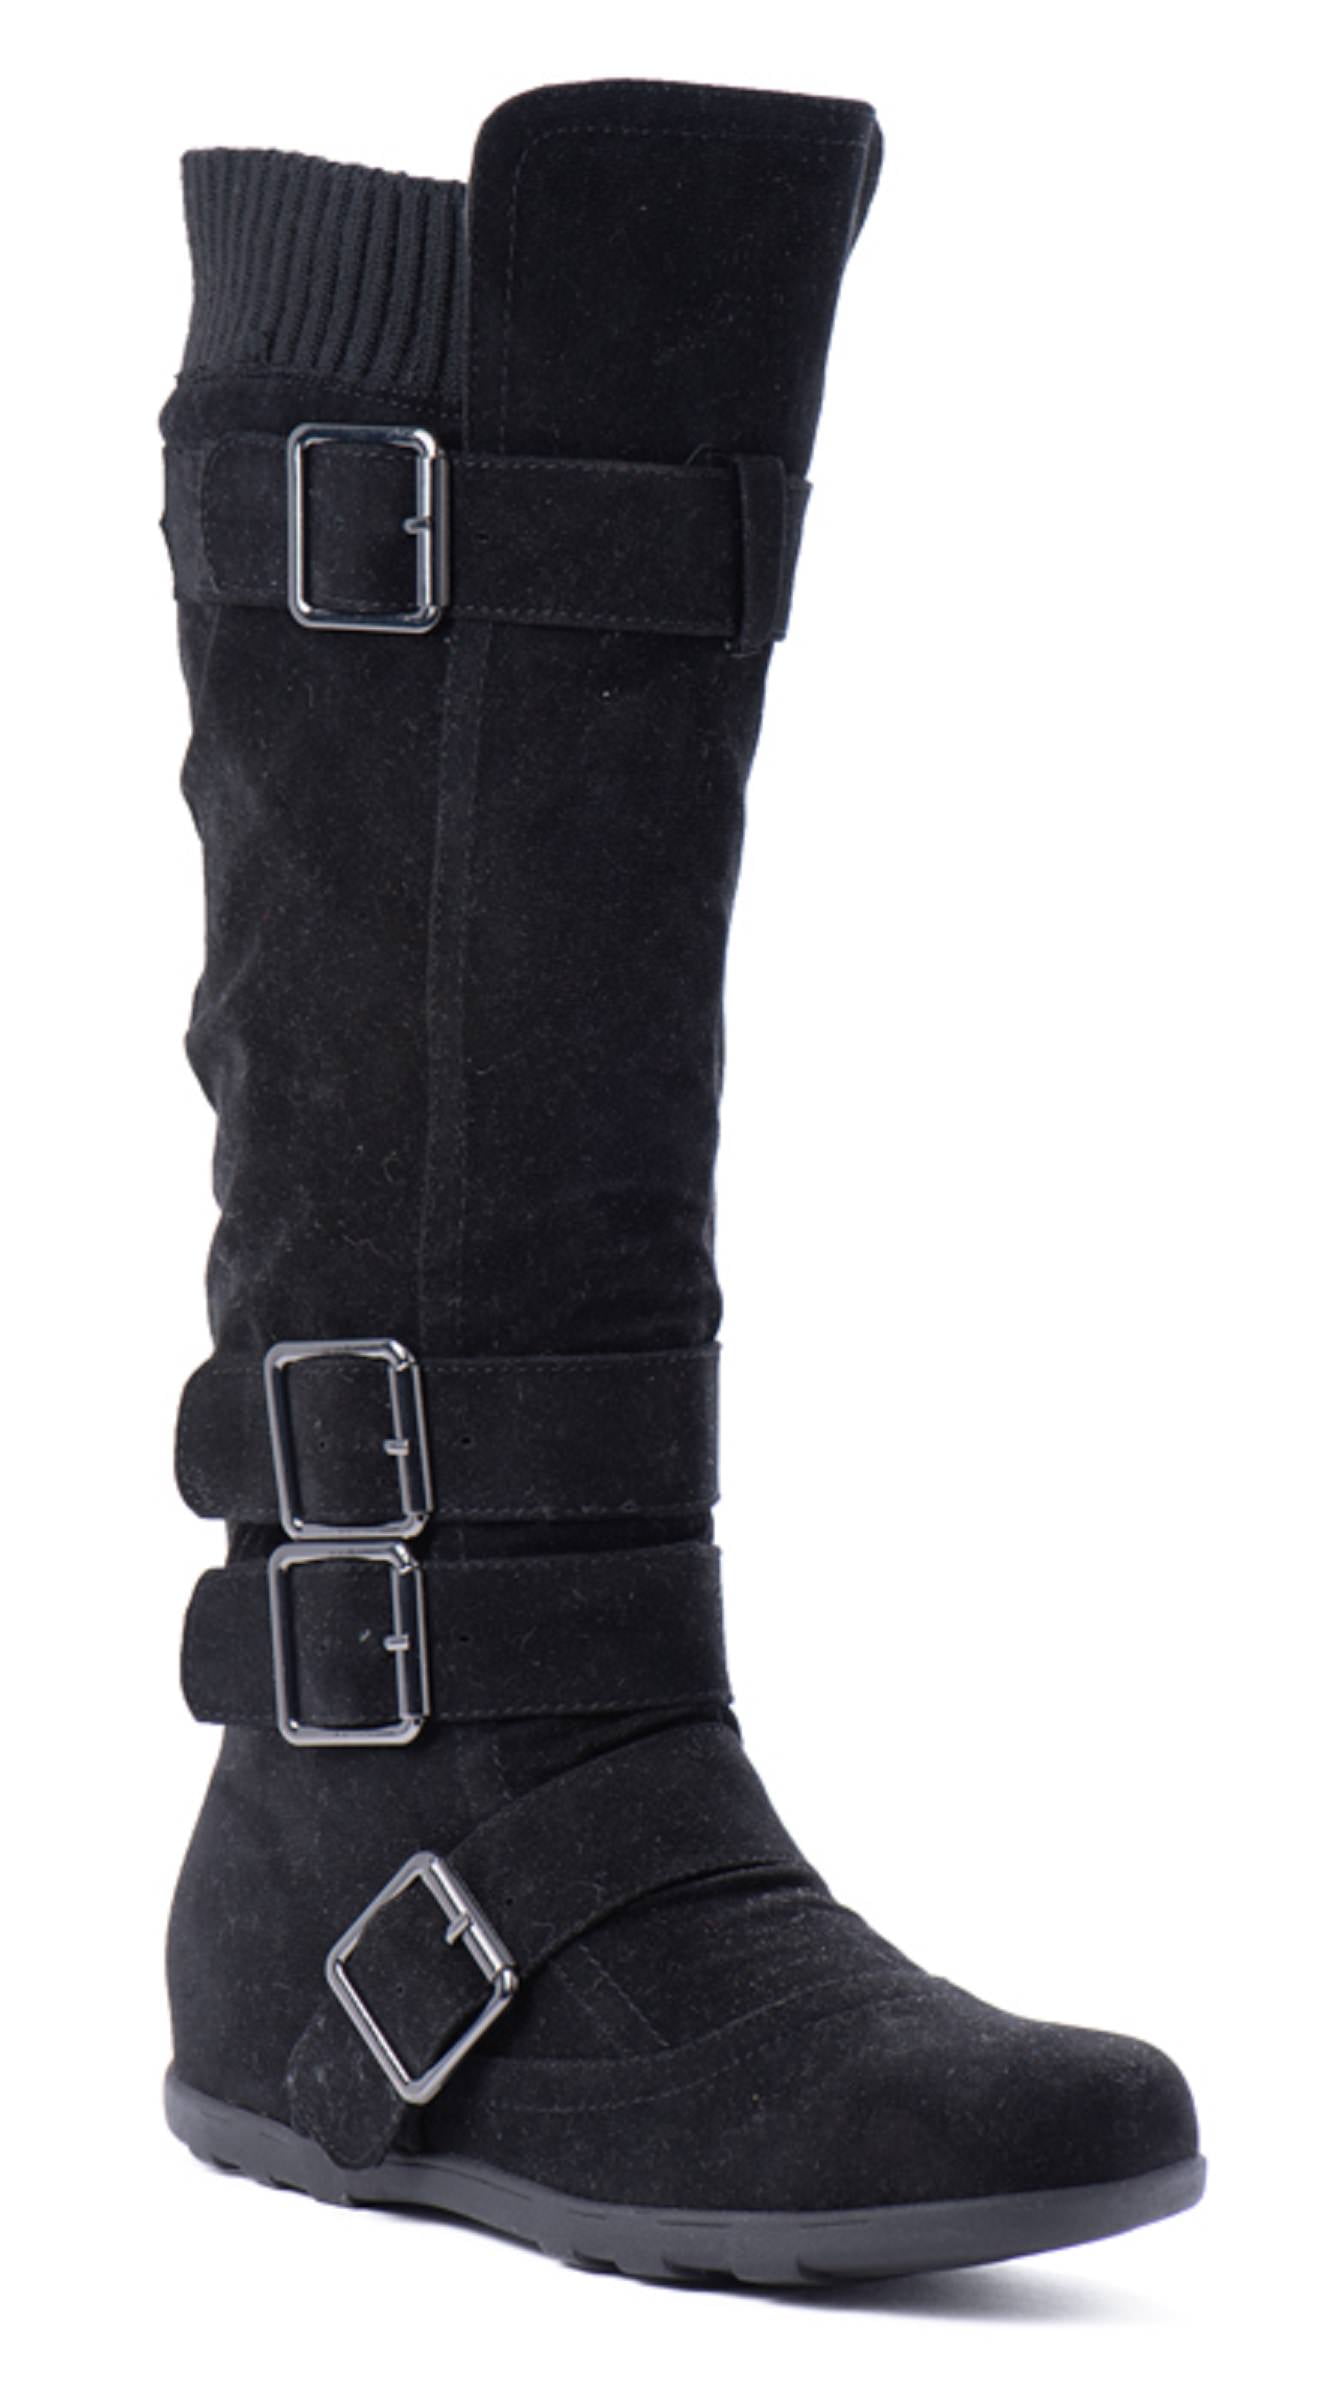 suede boots women's knee high